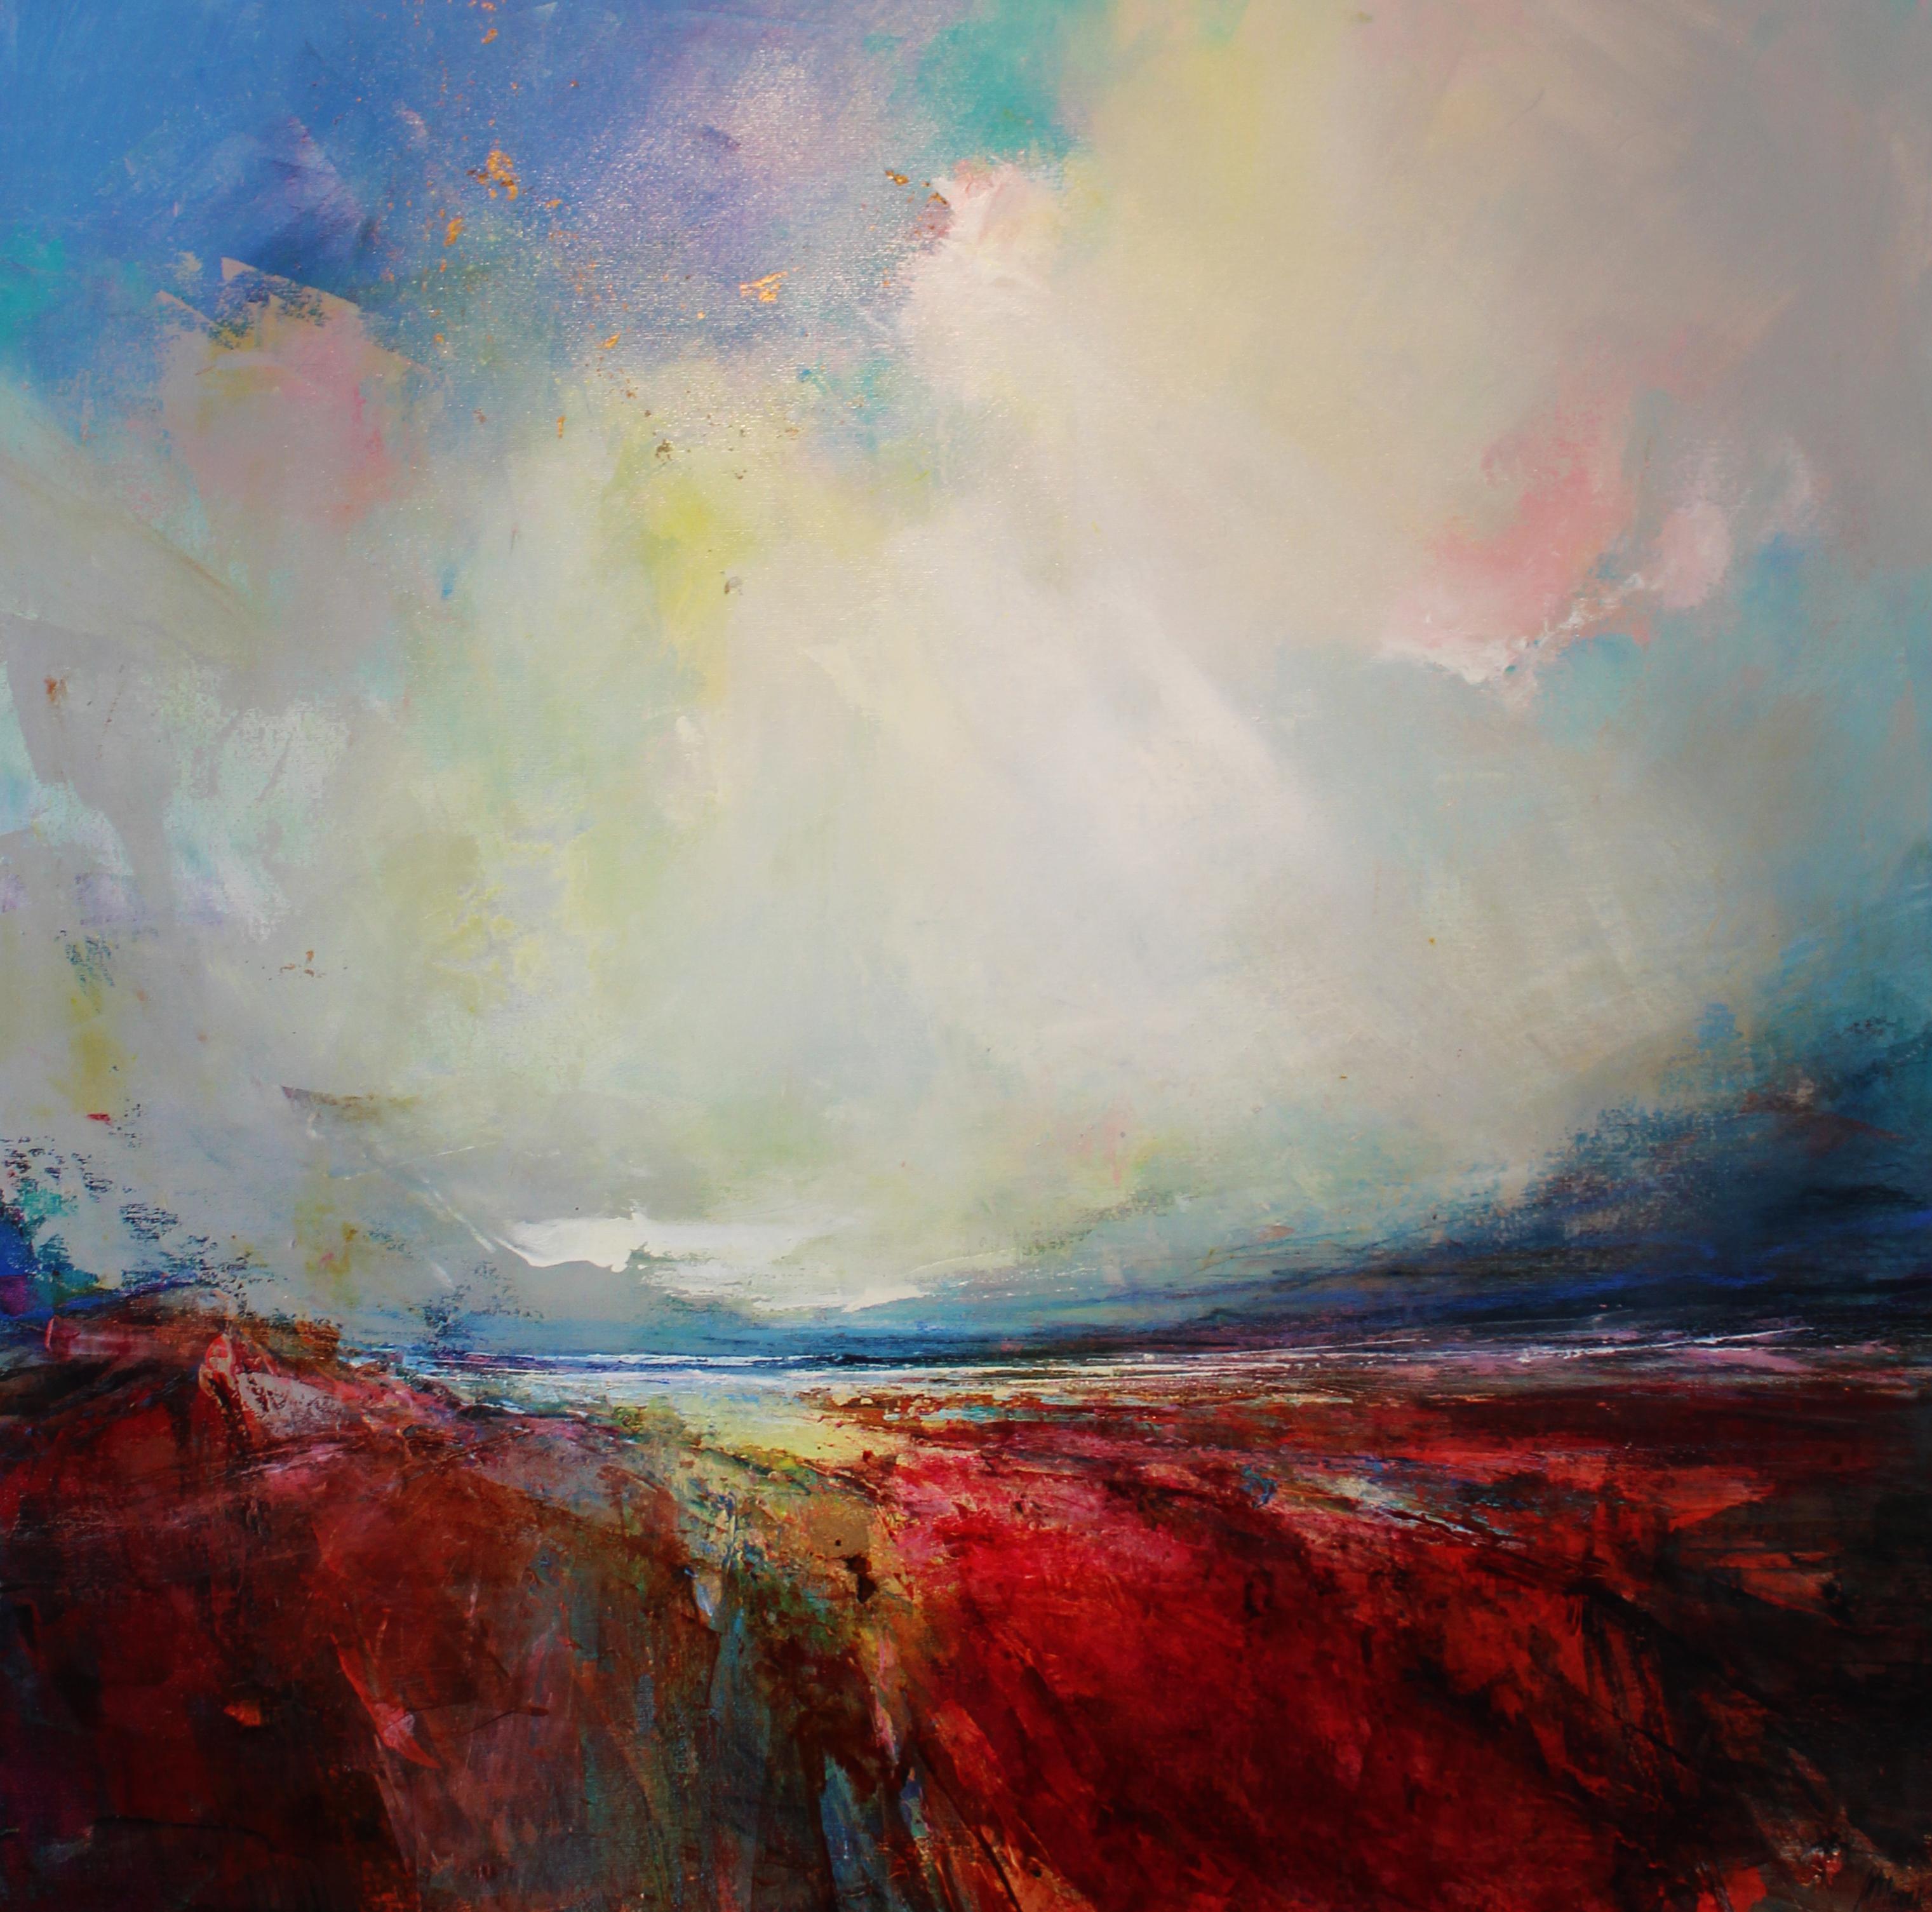 Morning Peaks - abstract original landscape artwork expressionist modern paint